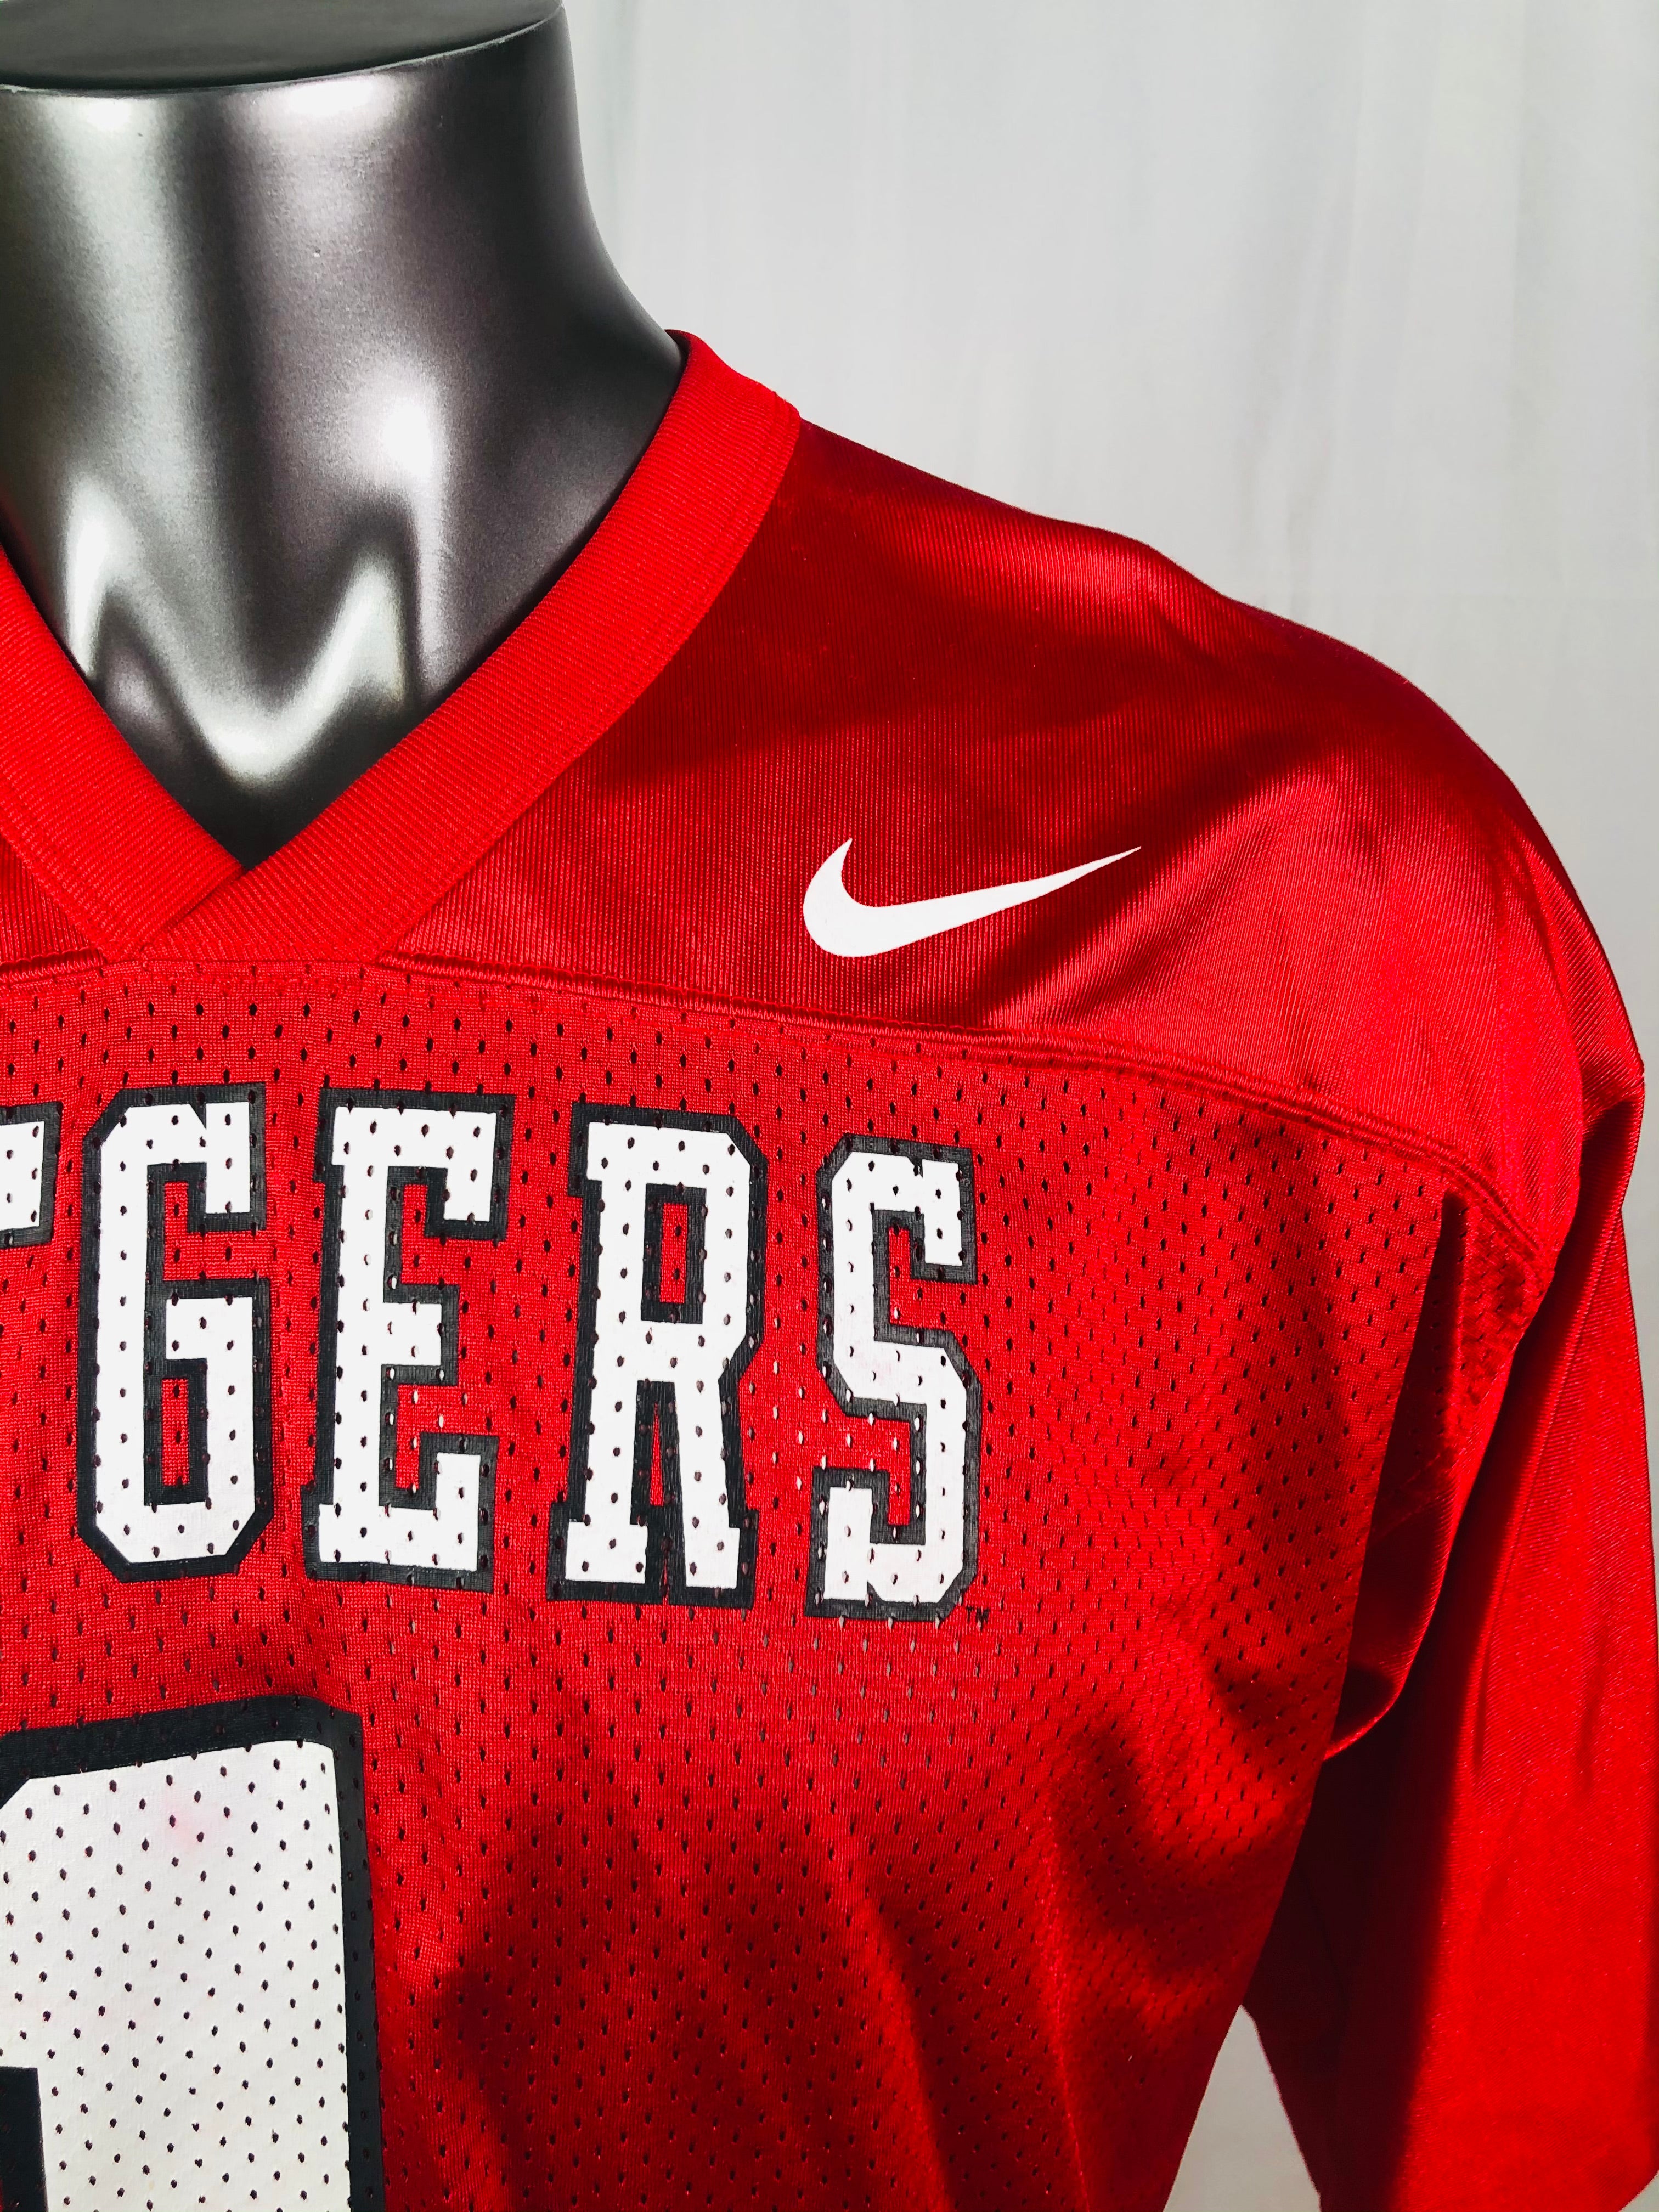 Rutgers Basketball Replica Jersey - Scarlet Fever Rutgers Gear